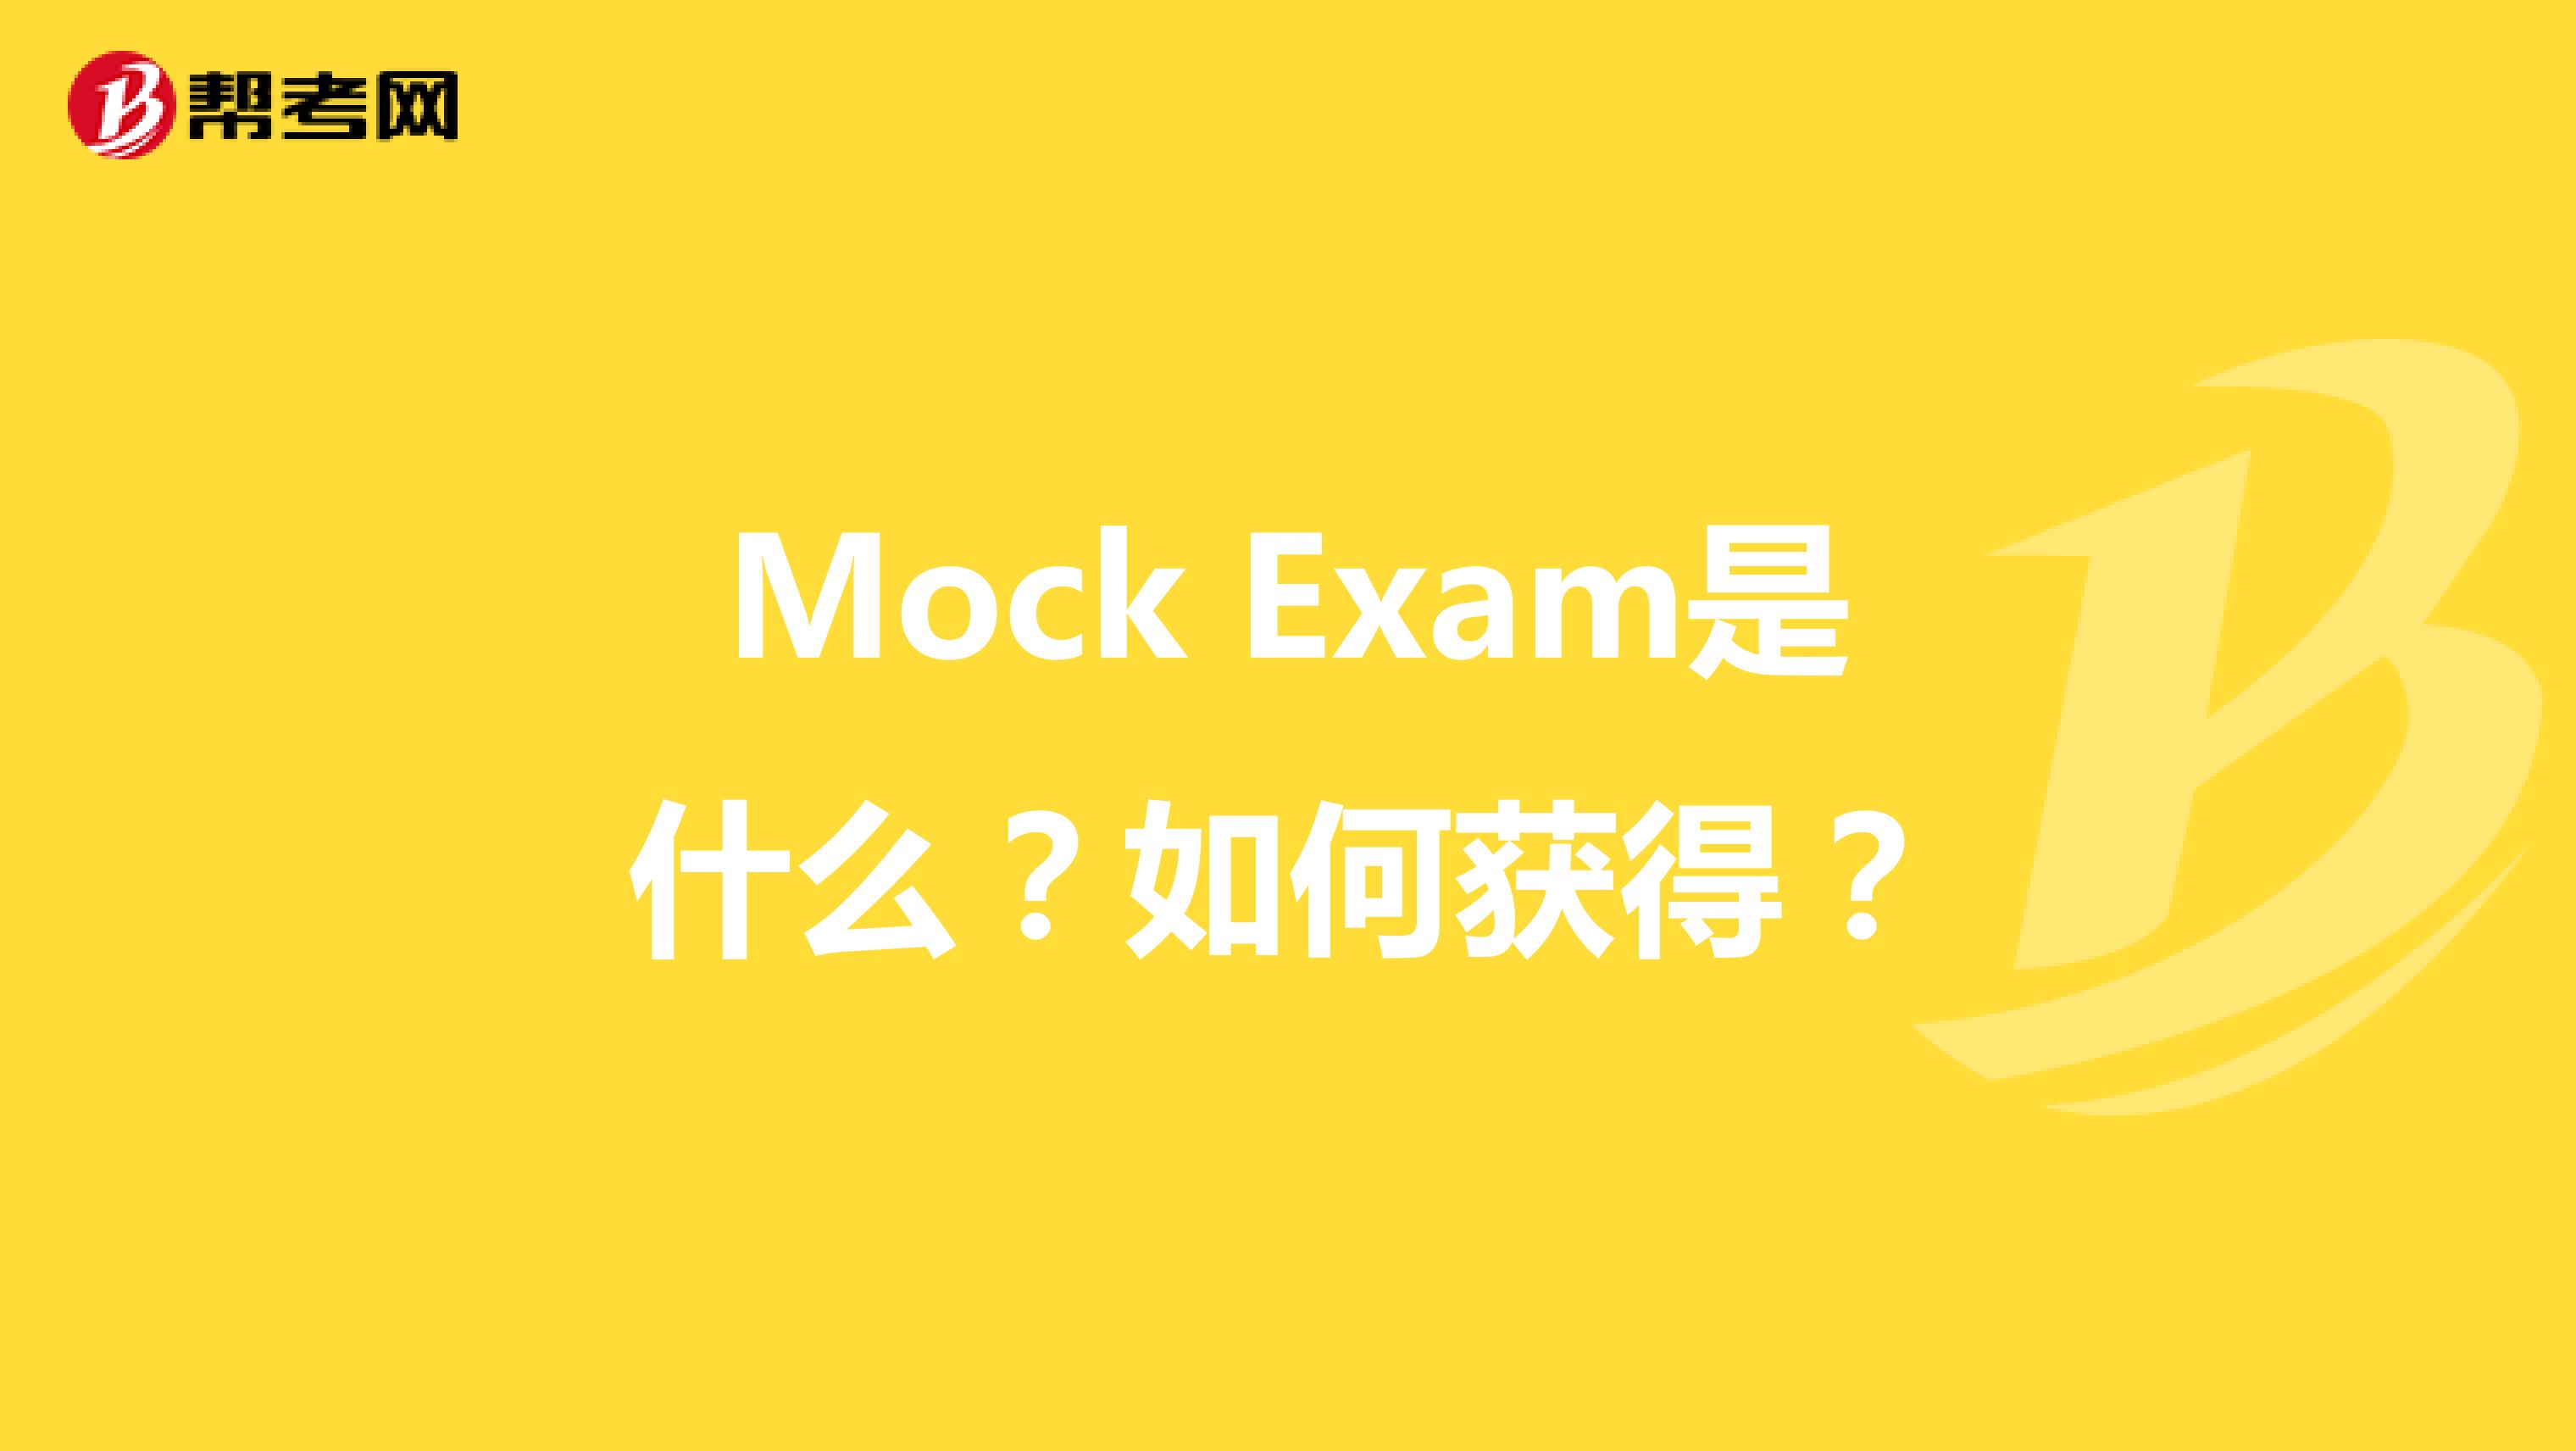 Mock Exam是什么？如何獲得？